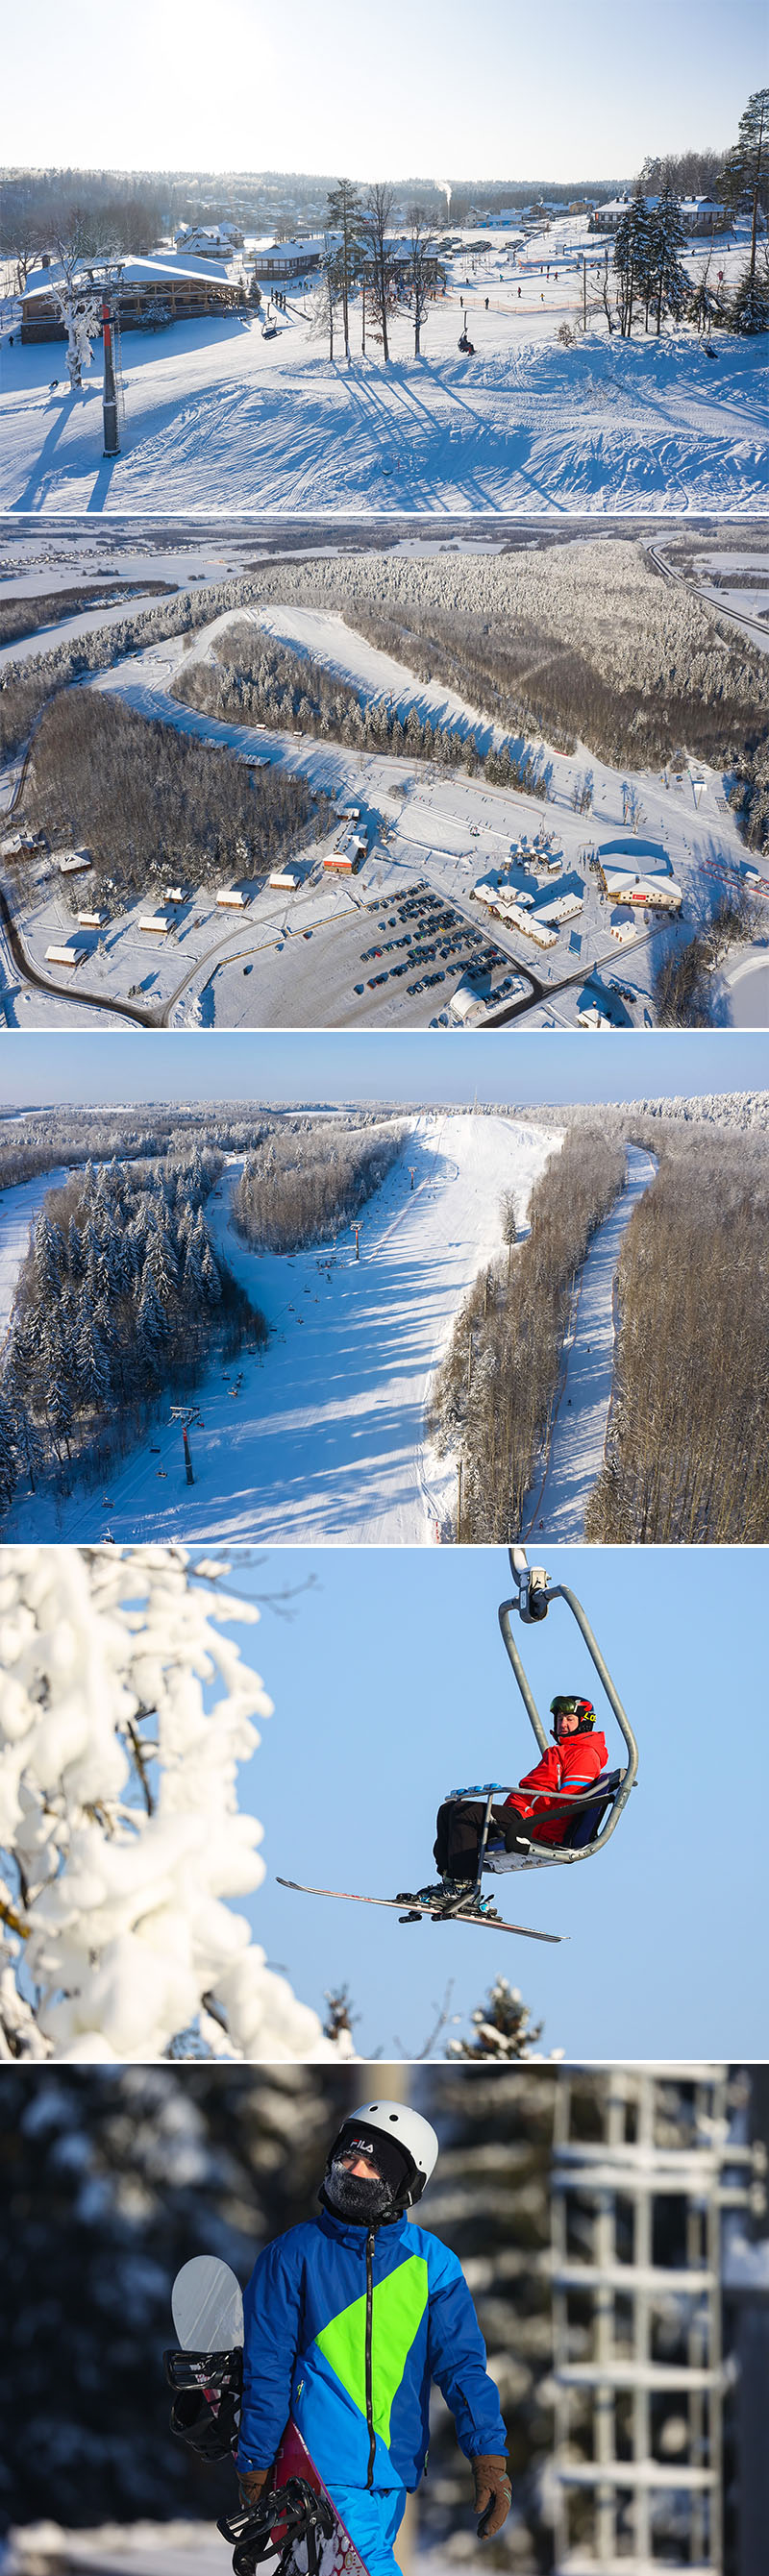 Winter holidays in the ski resorts